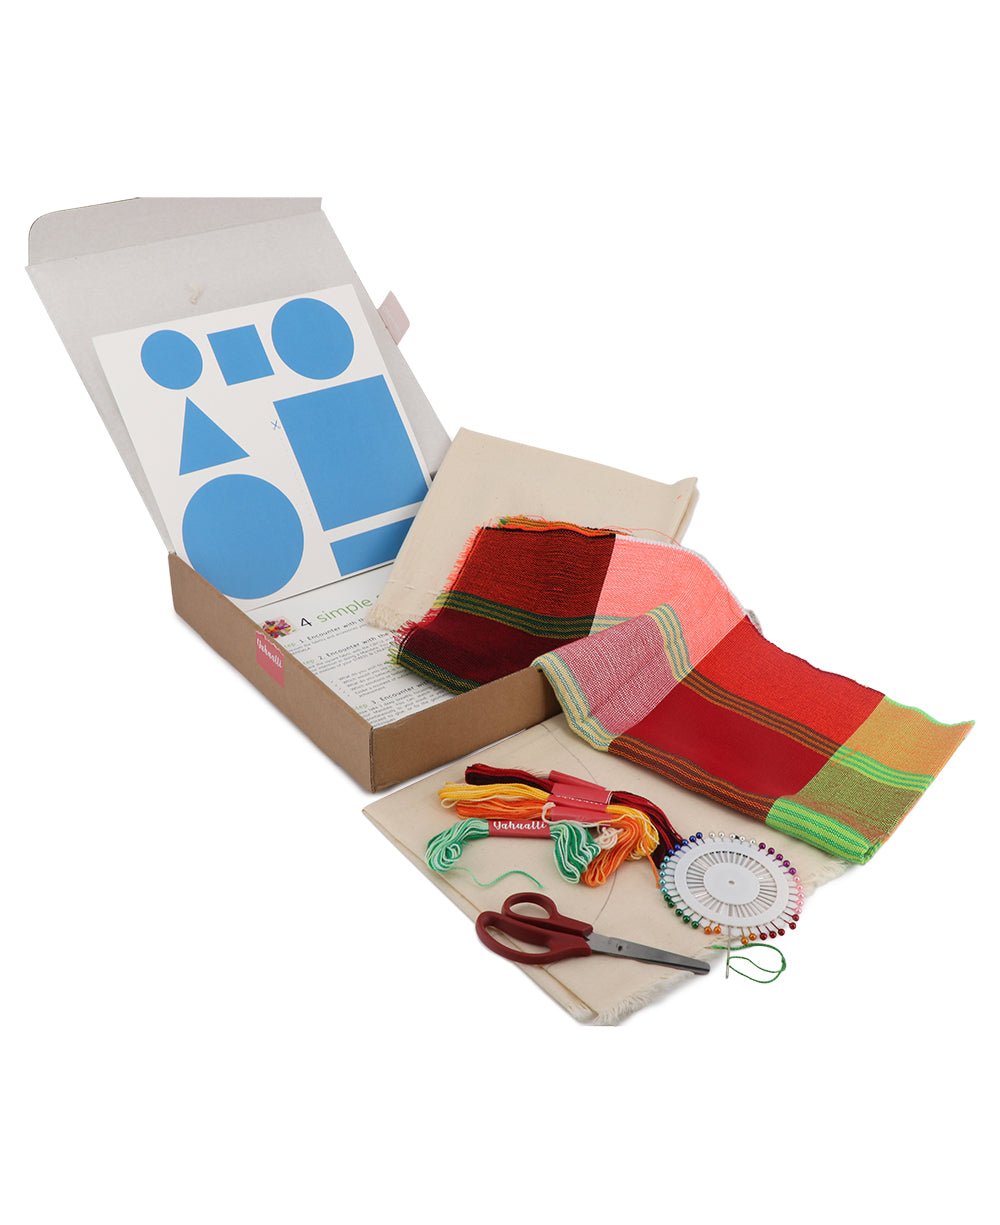 Create Your Own Mandala Decorative Pillow Cover Textile Art Therapy - Throw Pillows Indigo